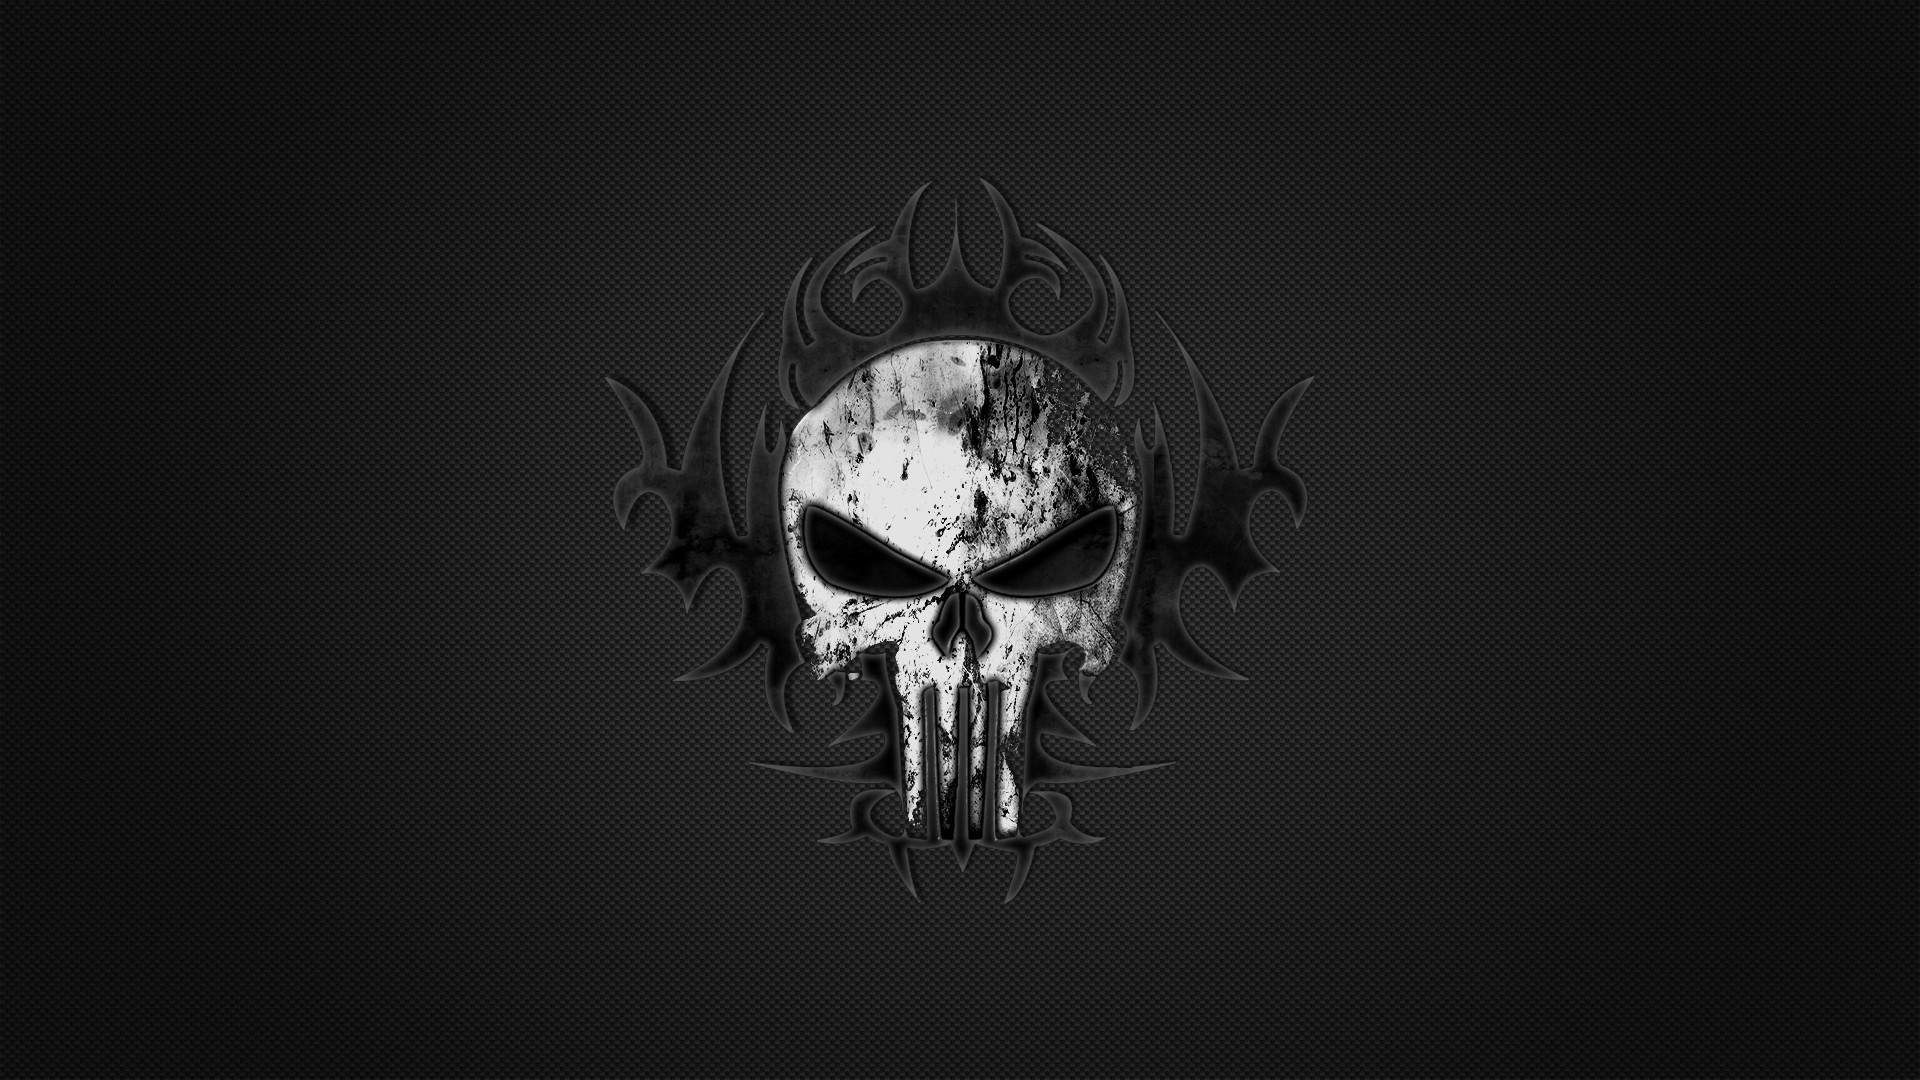 1920x1080  Punisher Images For Desktop Wallpaper 1920 x 1080 px 623.08 KB  max skull logo widescreen